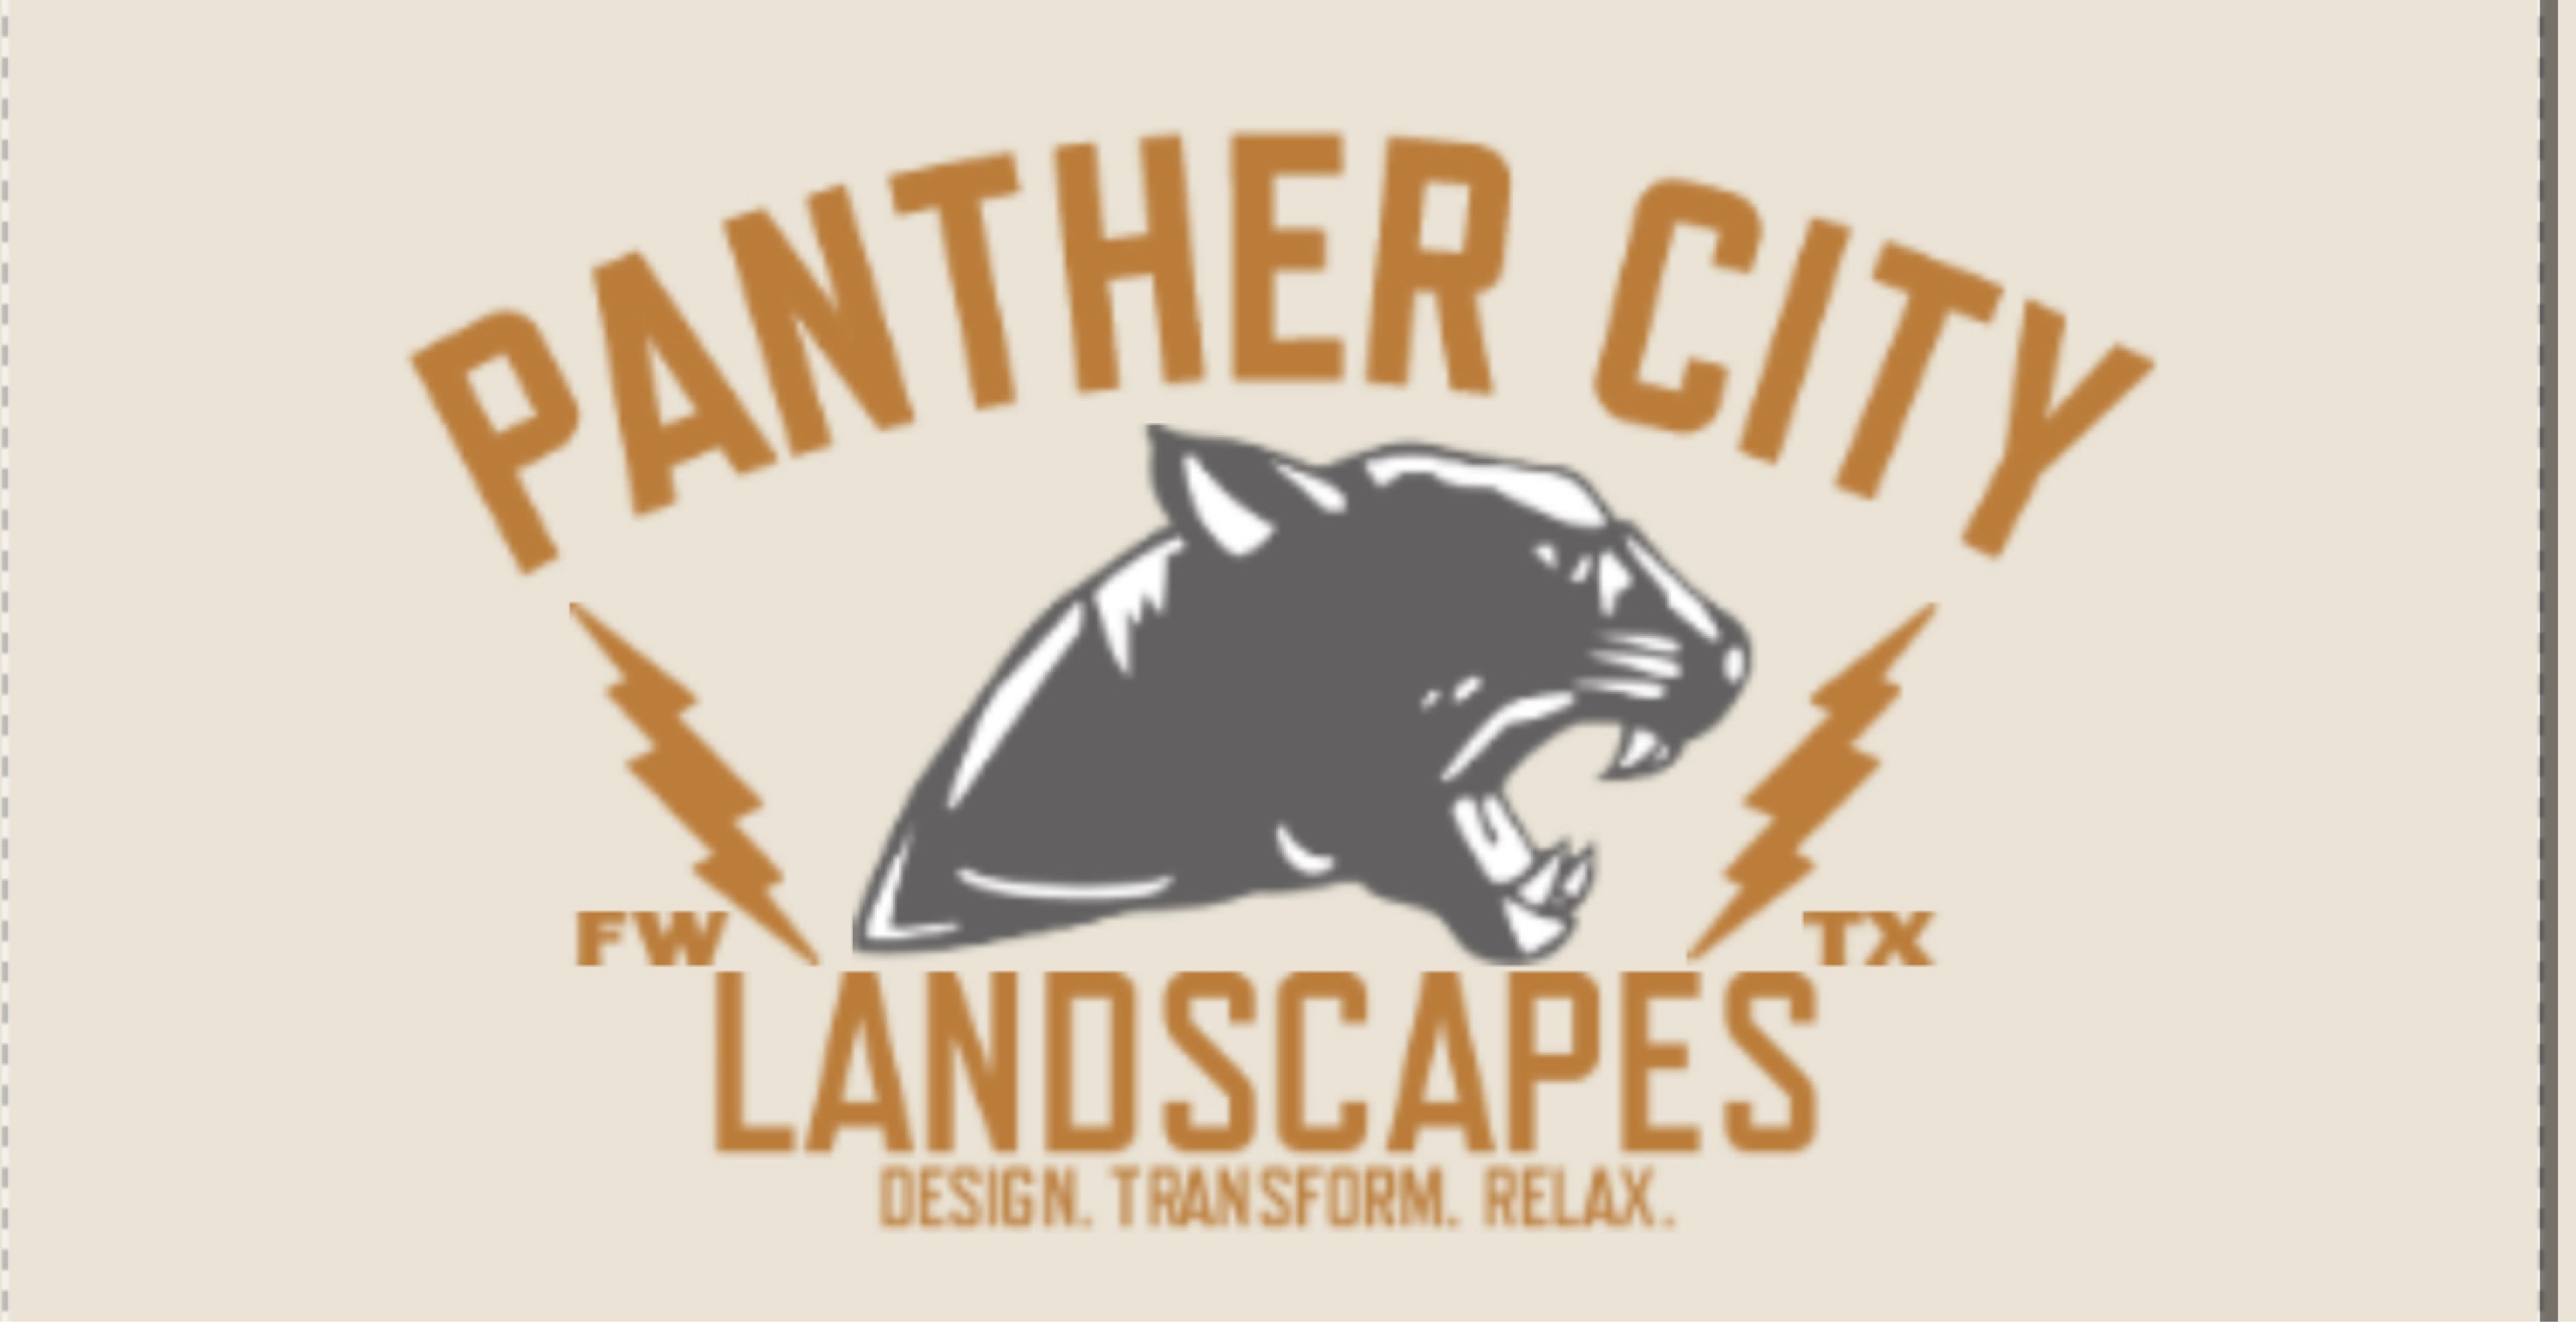 Panther City Landscapes, LLC Logo